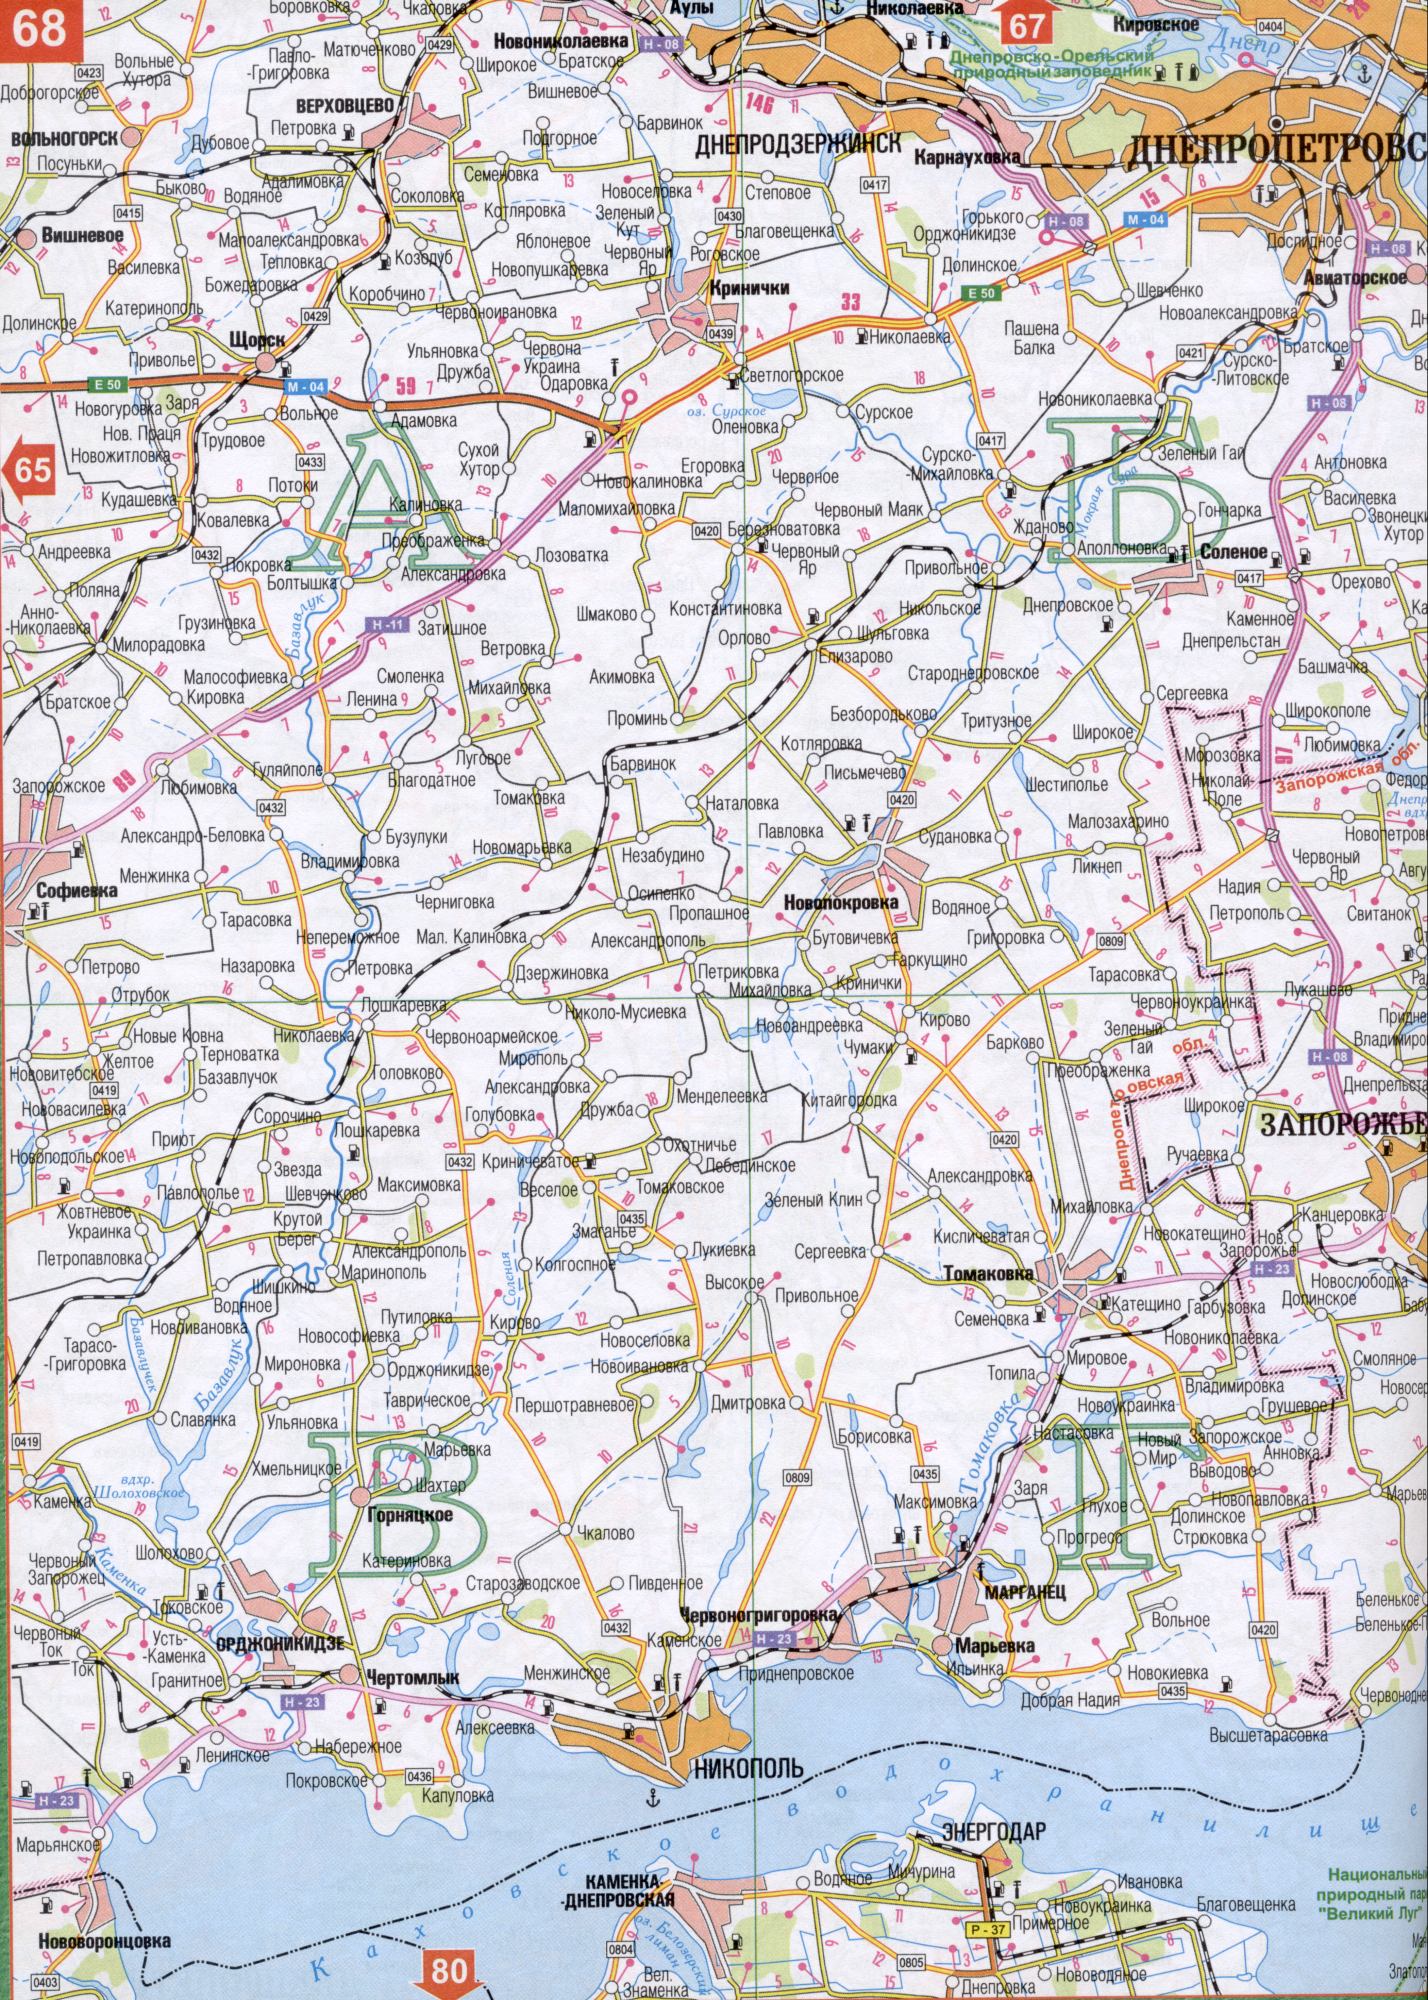 Map of Dnepropetrovsk region of Ukraine 1cm = 5km. Detailed road map - Dneprpetrovskaya area. Free Mzha, Uda